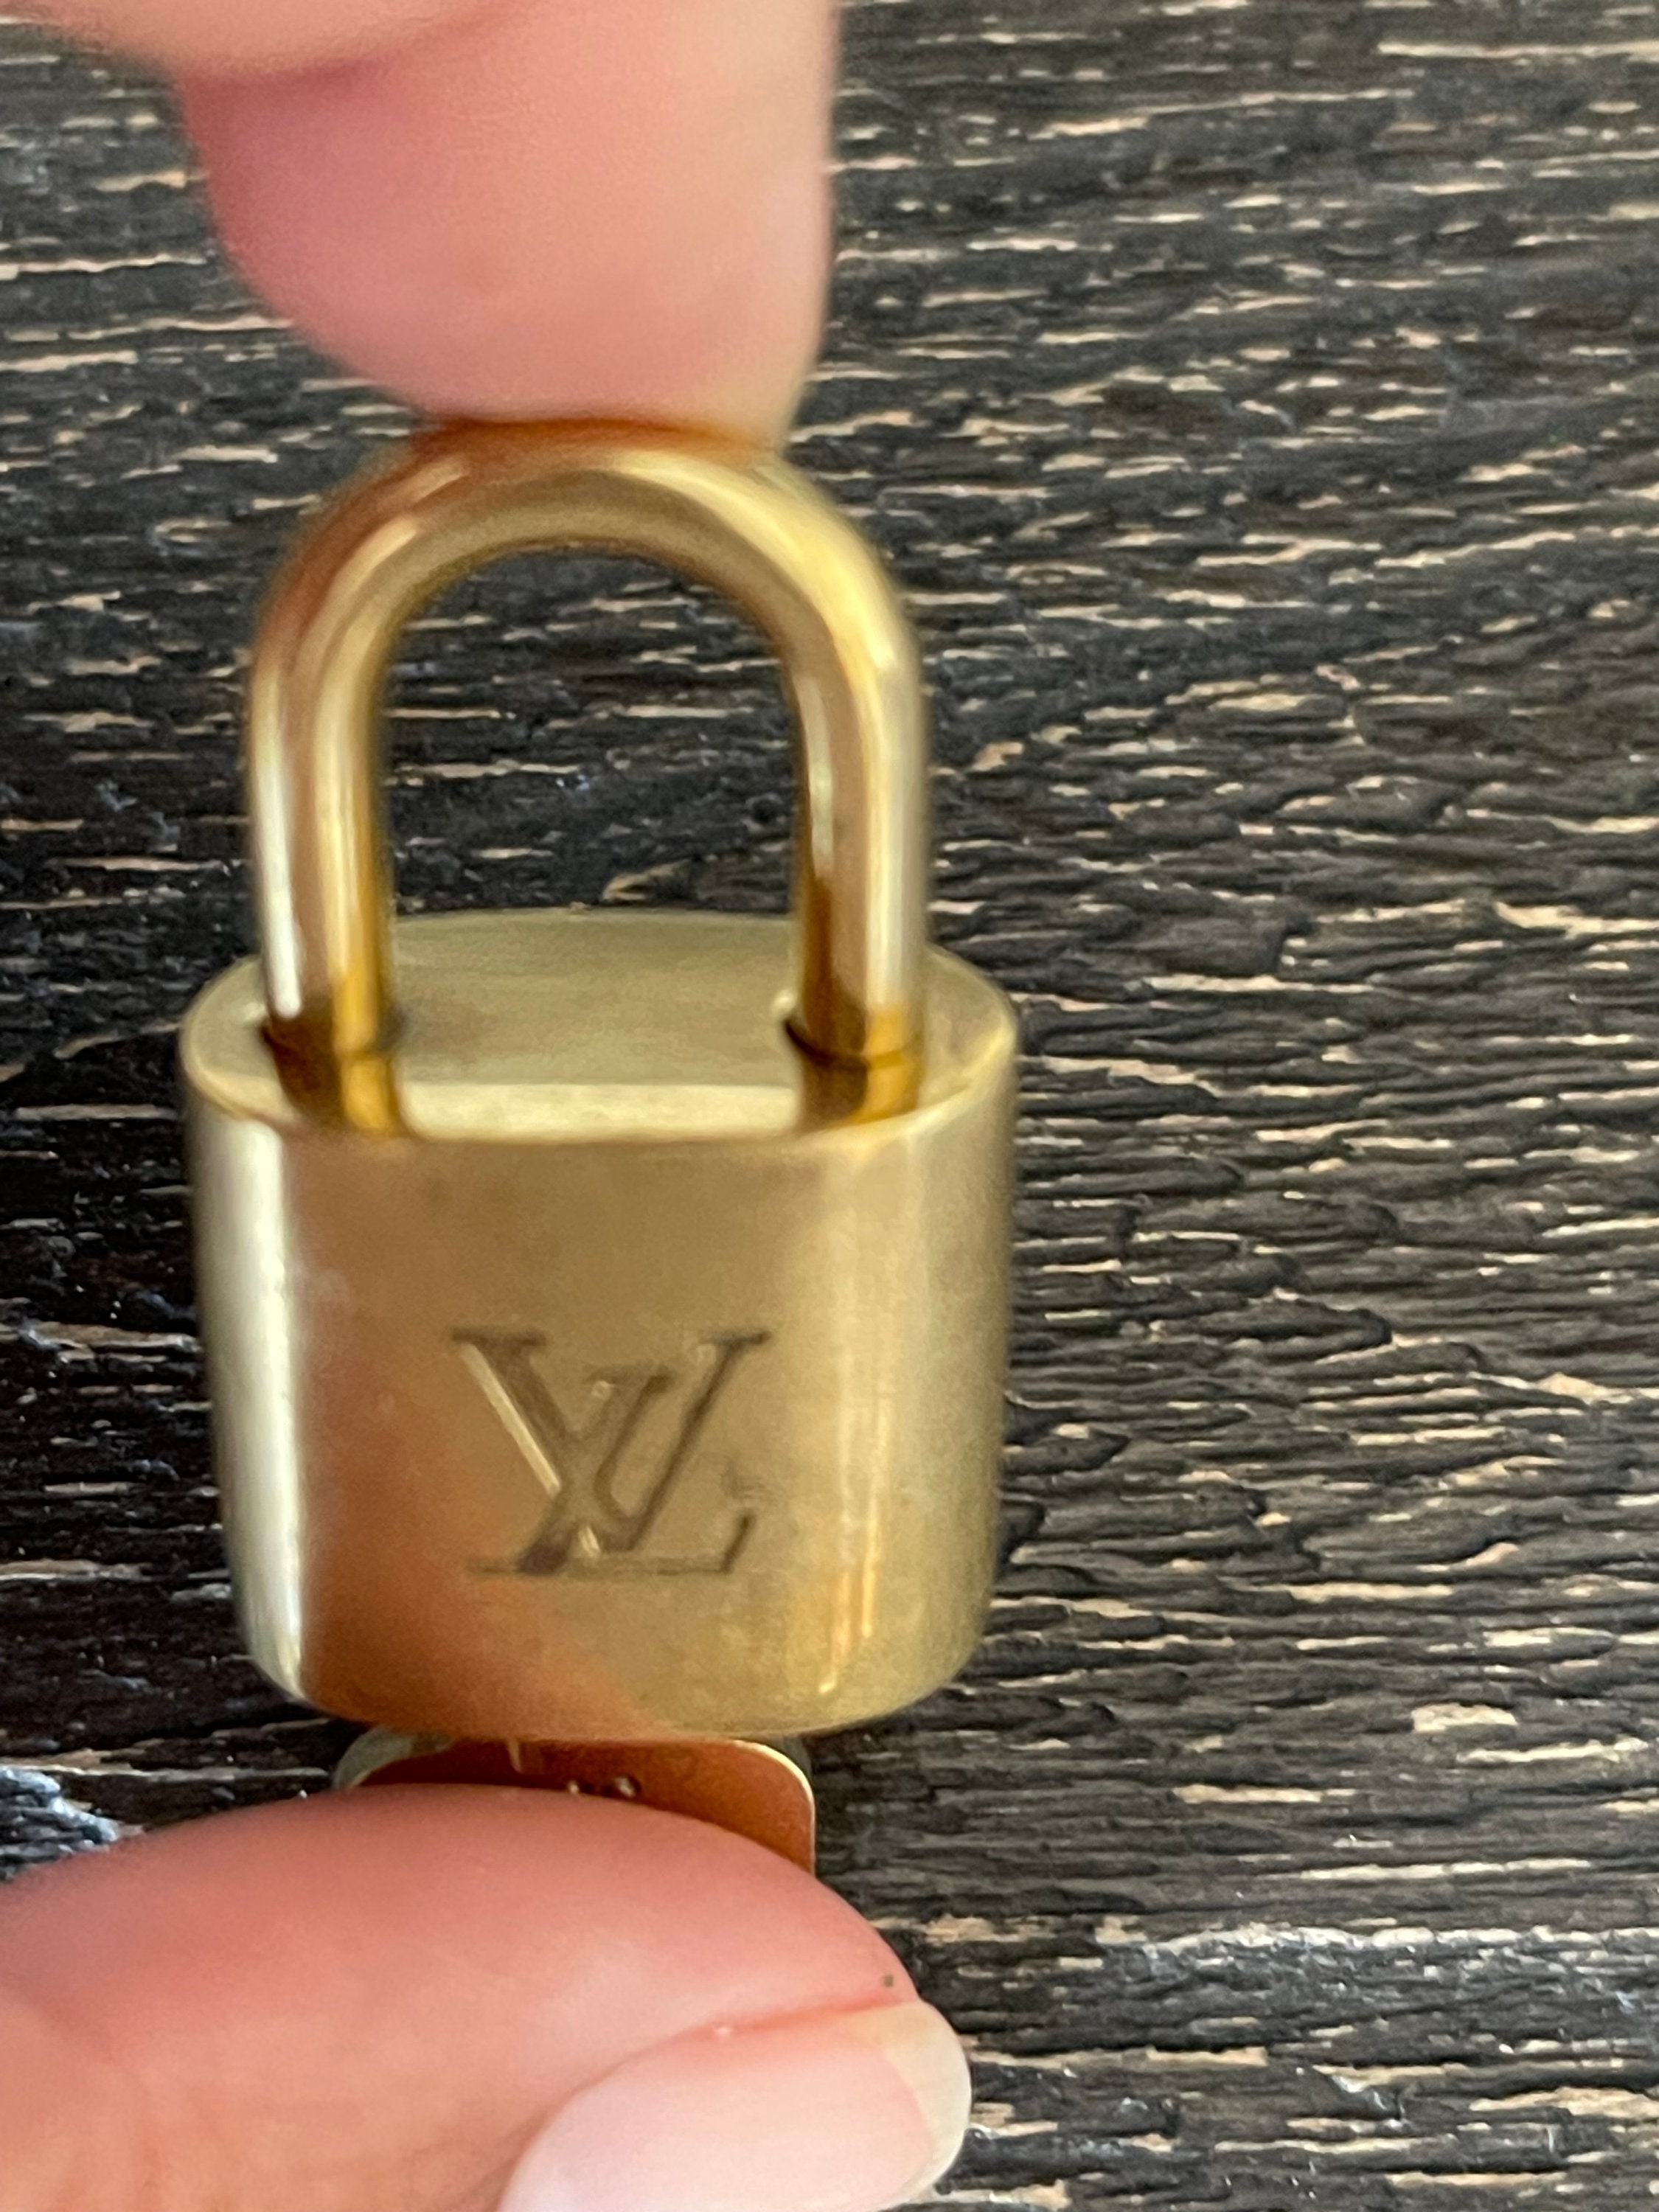 Louis Vuitton Padlock Lock and Key 301 LV Purse Charm Not 